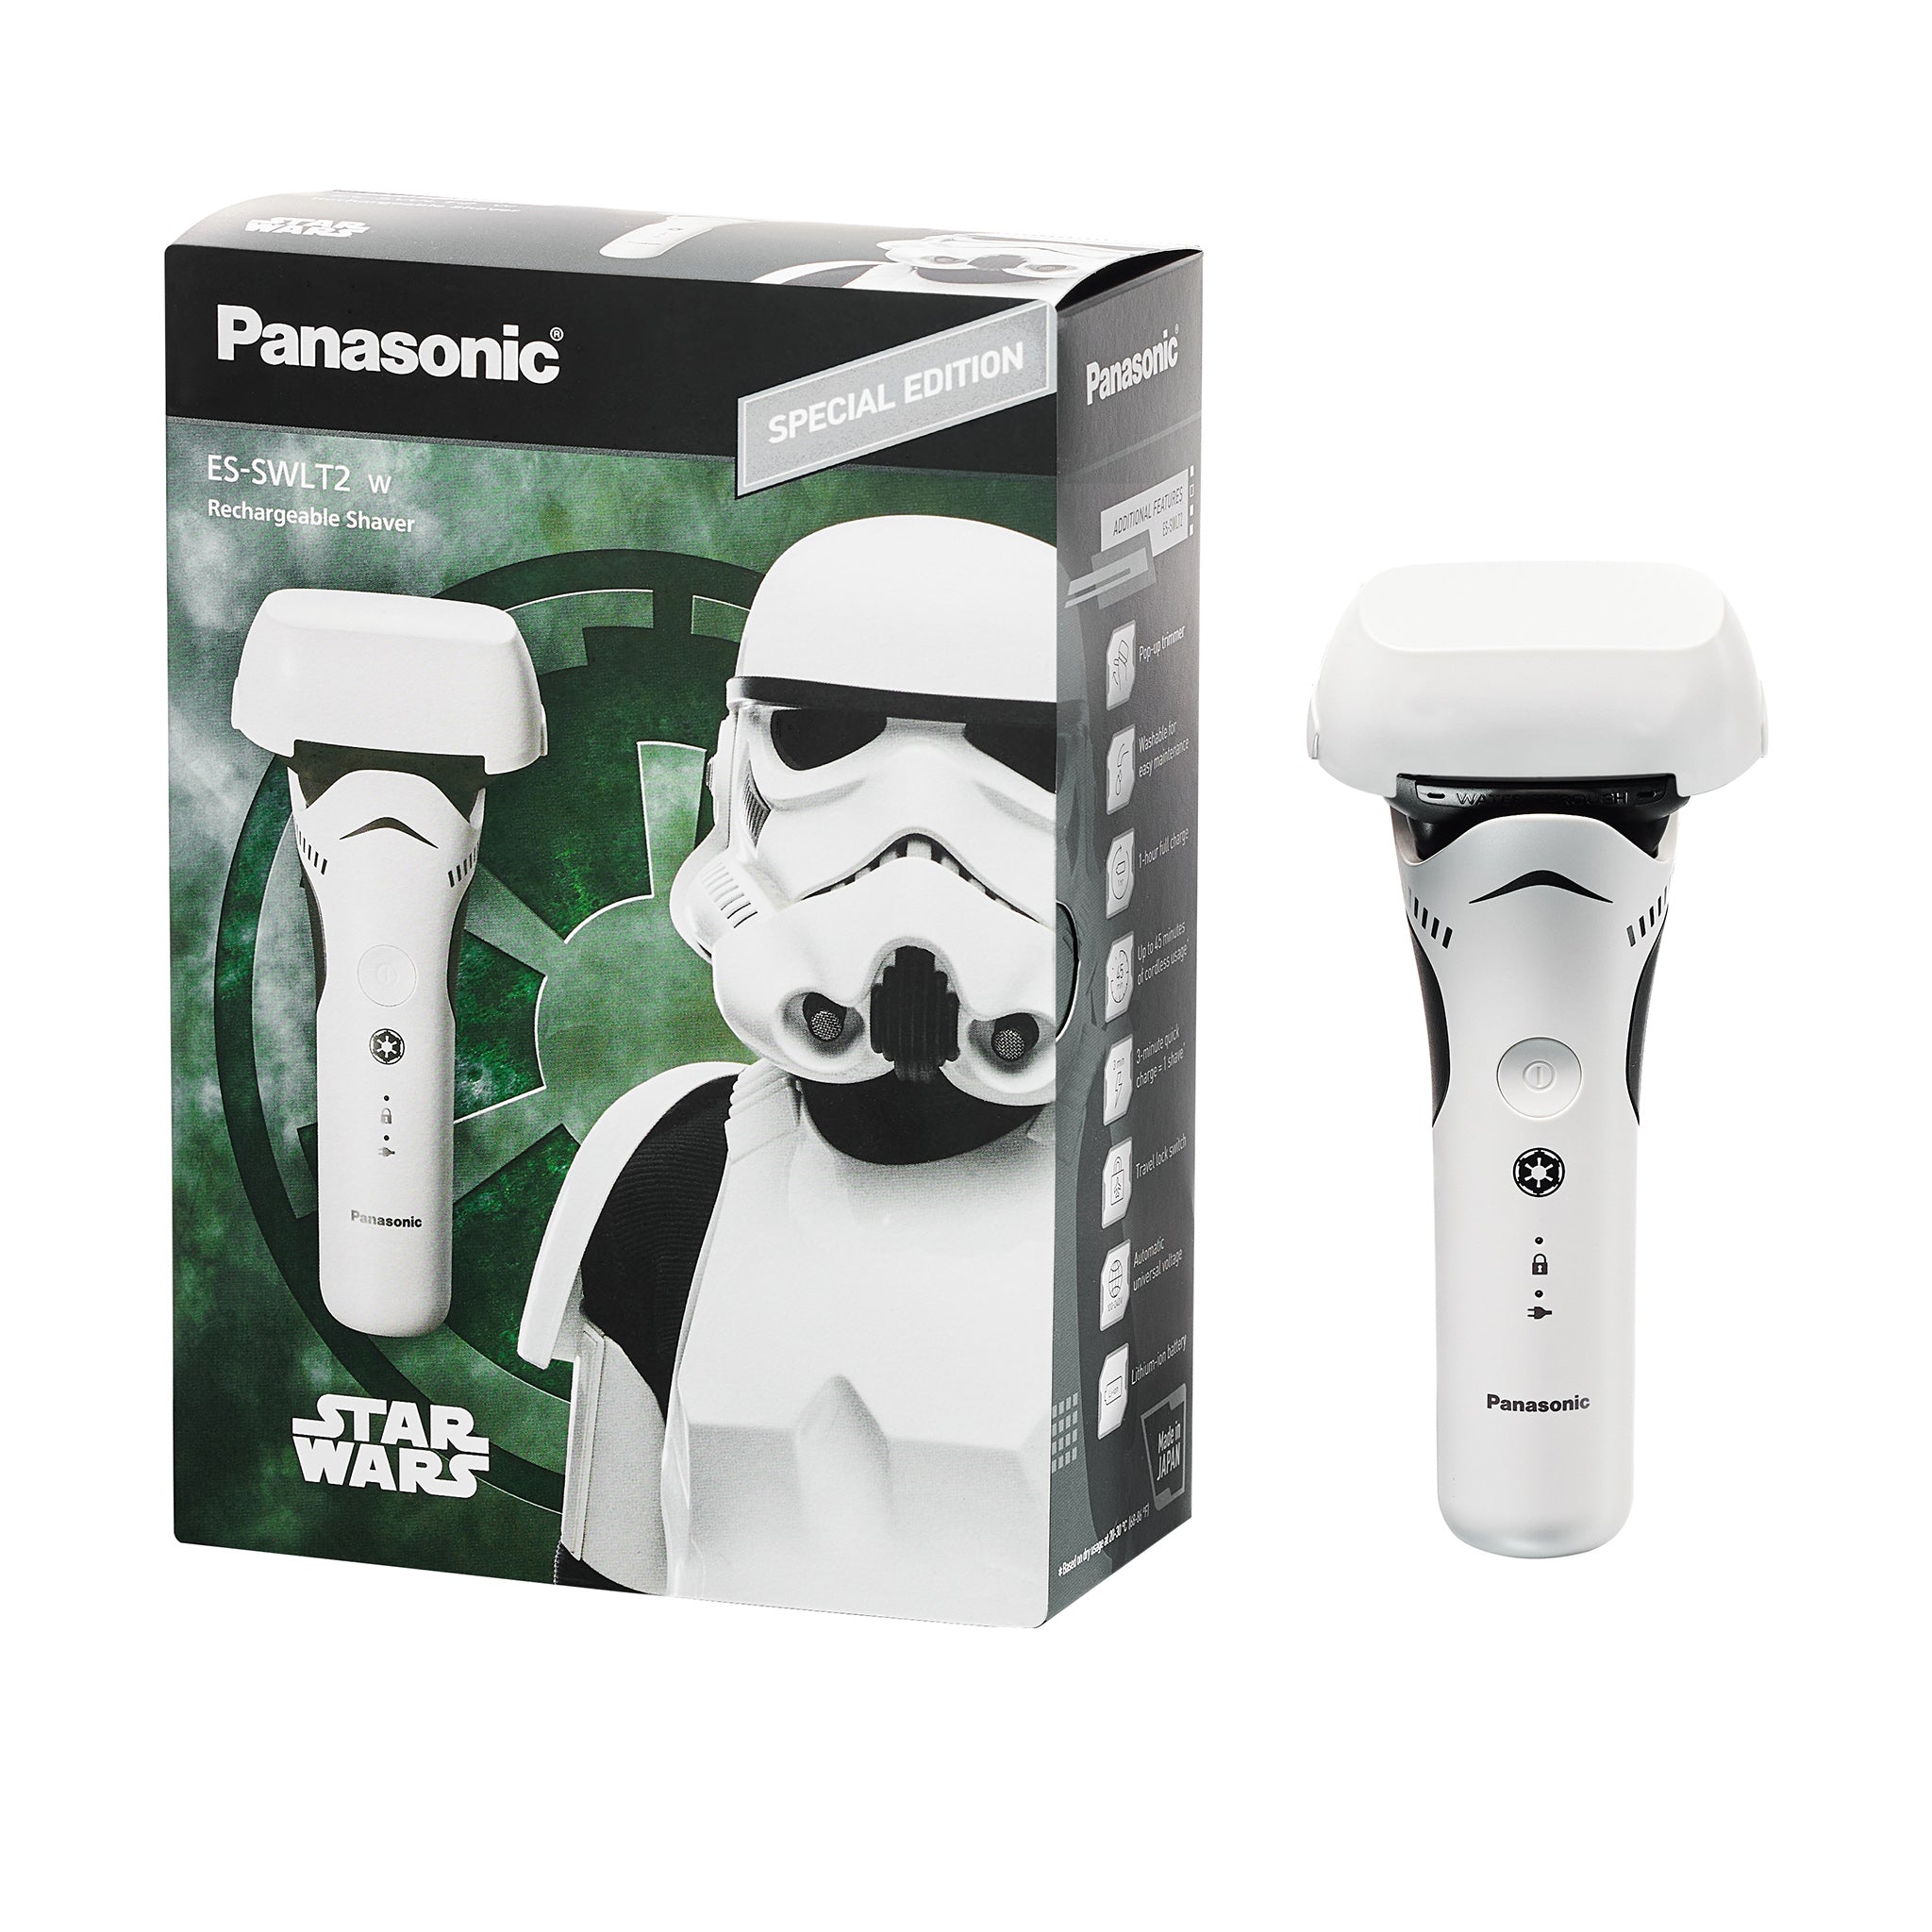 Panasonic España - ¿Estás pensando en comprar una afeitadora, un irrigador  dental, un secador de pelo… o cualquier producto de personal care? 📣  Entonces estás de suerte, porque organizamos un sorteo semanal